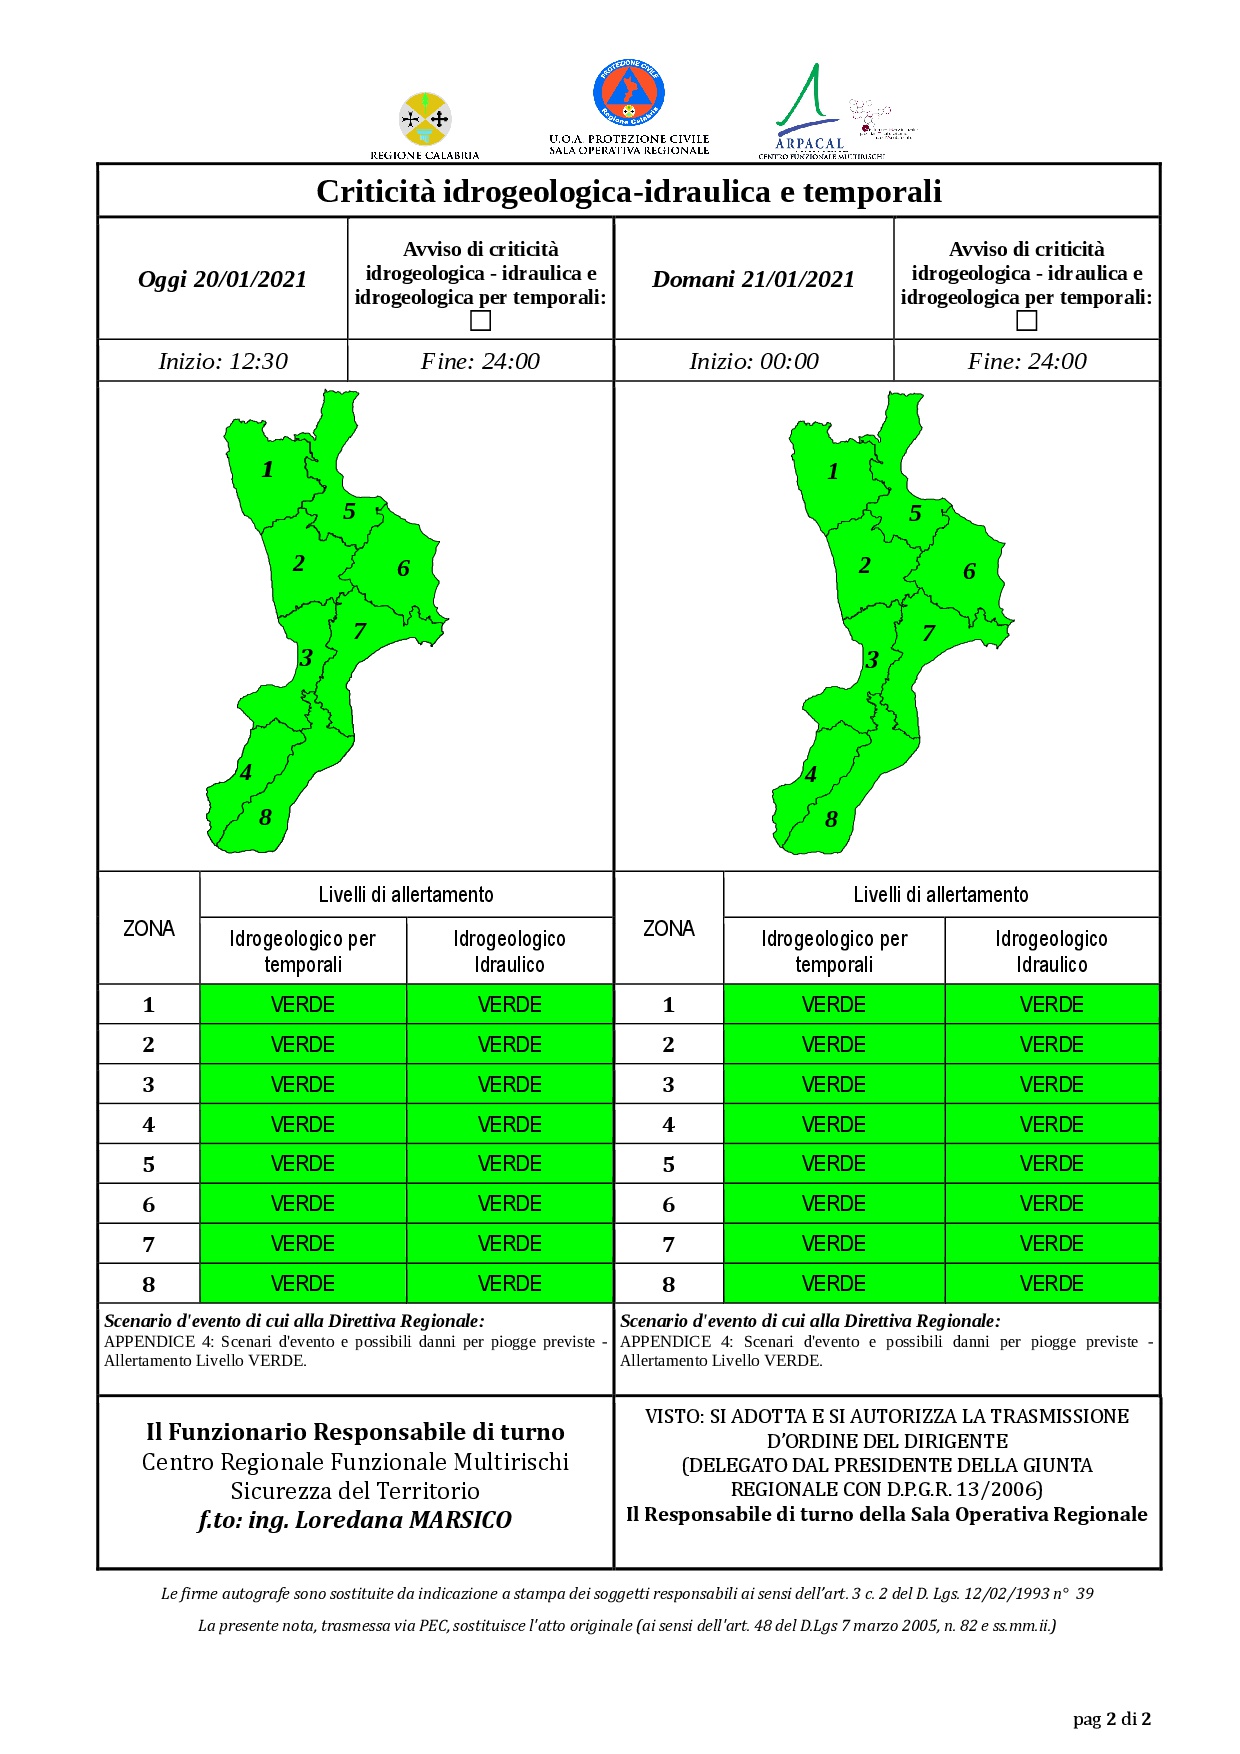 Criticità idrogeologica-idraulica e temporali in Calabria 20-01-2021